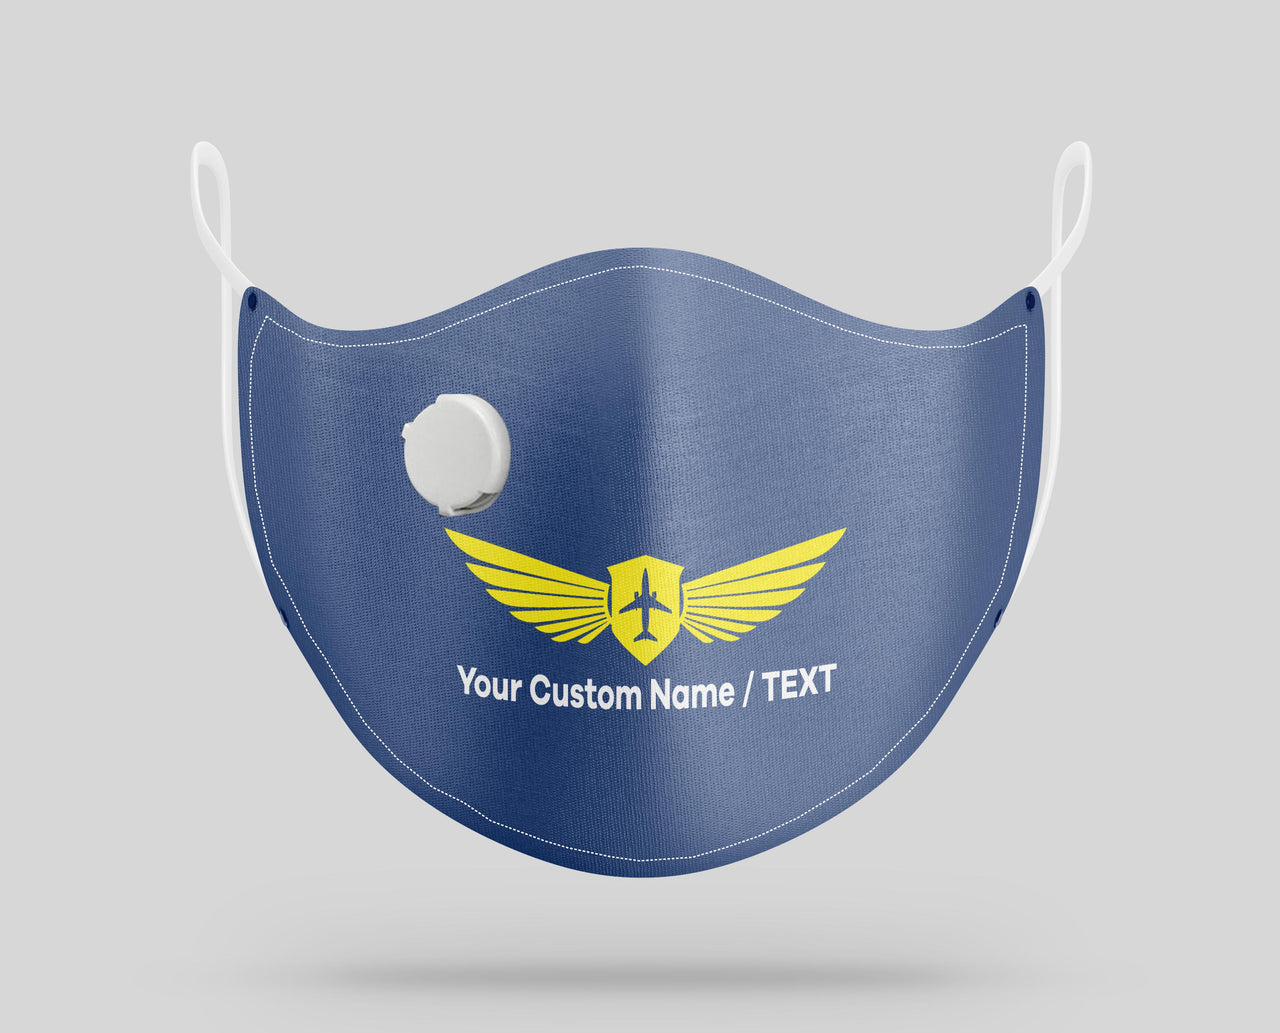 Your Custom Name & Text & Badge (2) Designed Face Masks